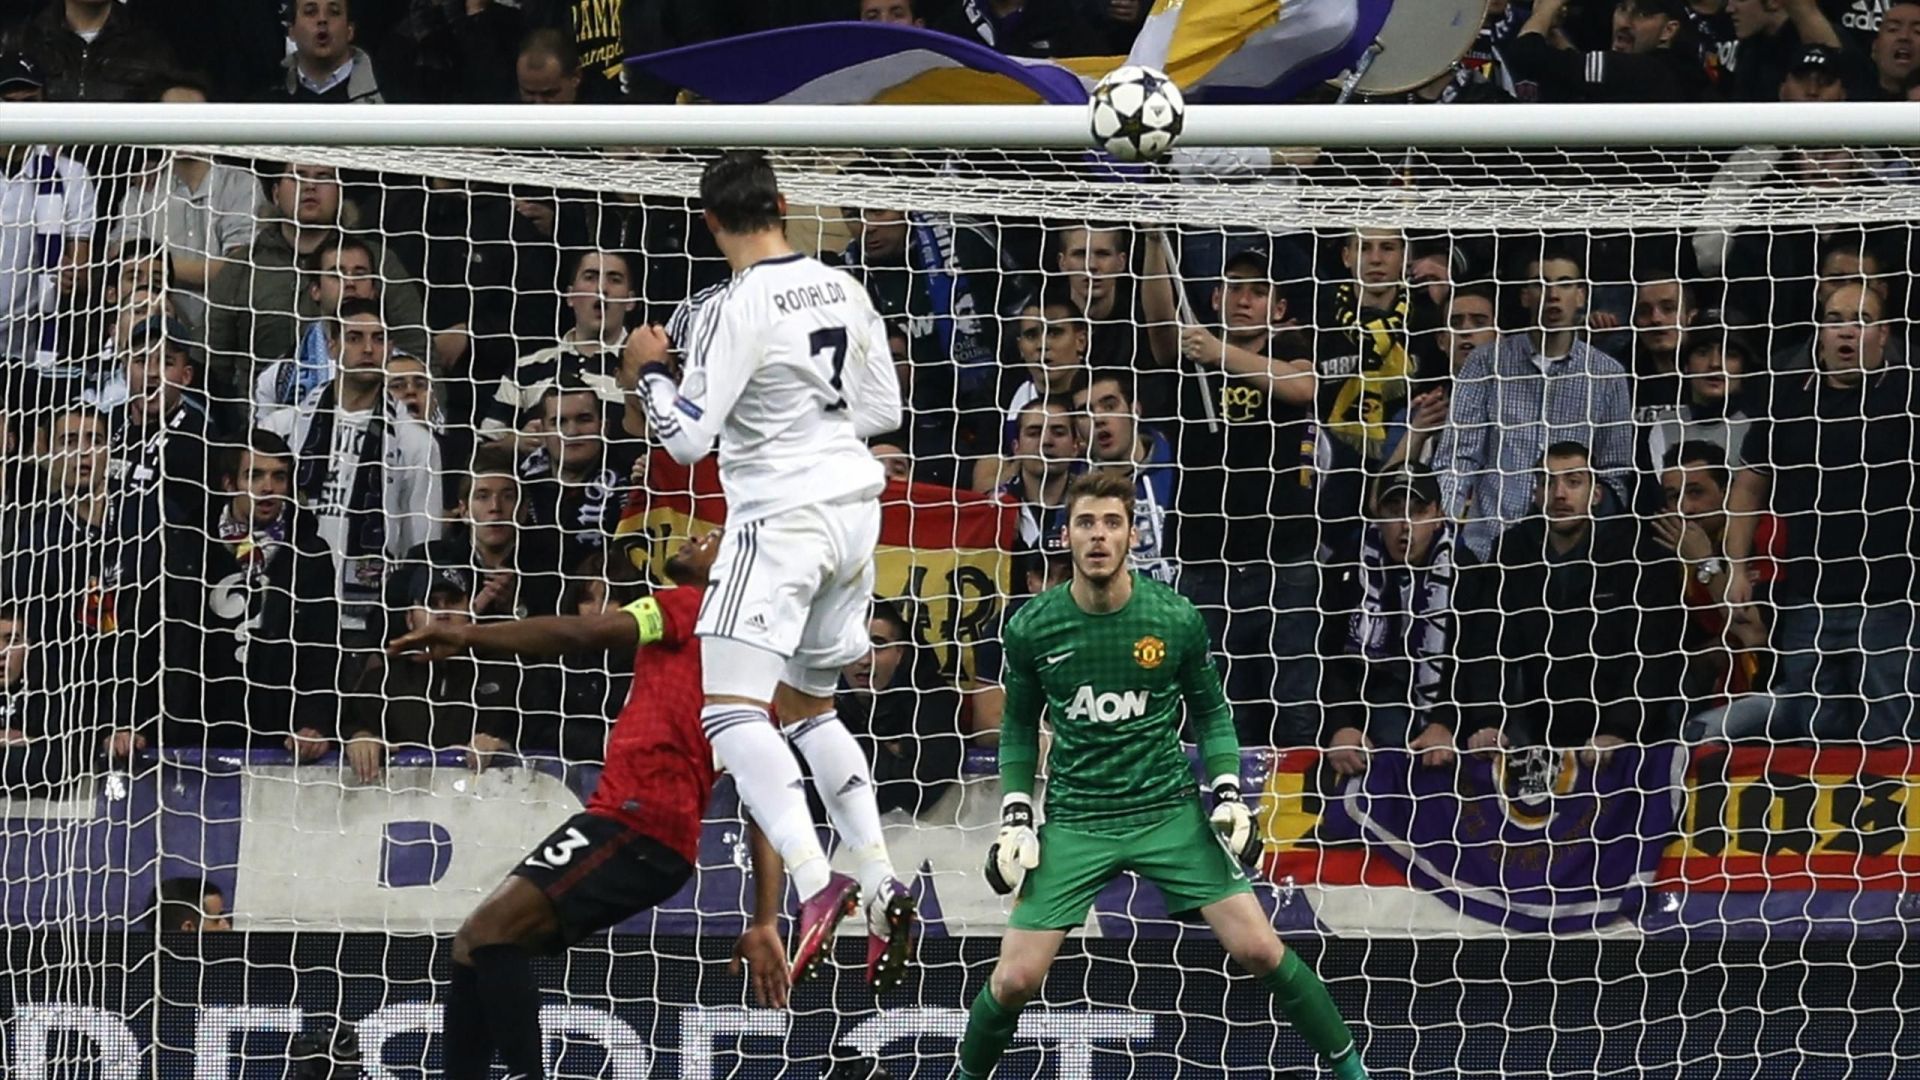 Ronaldo netted a memorable header